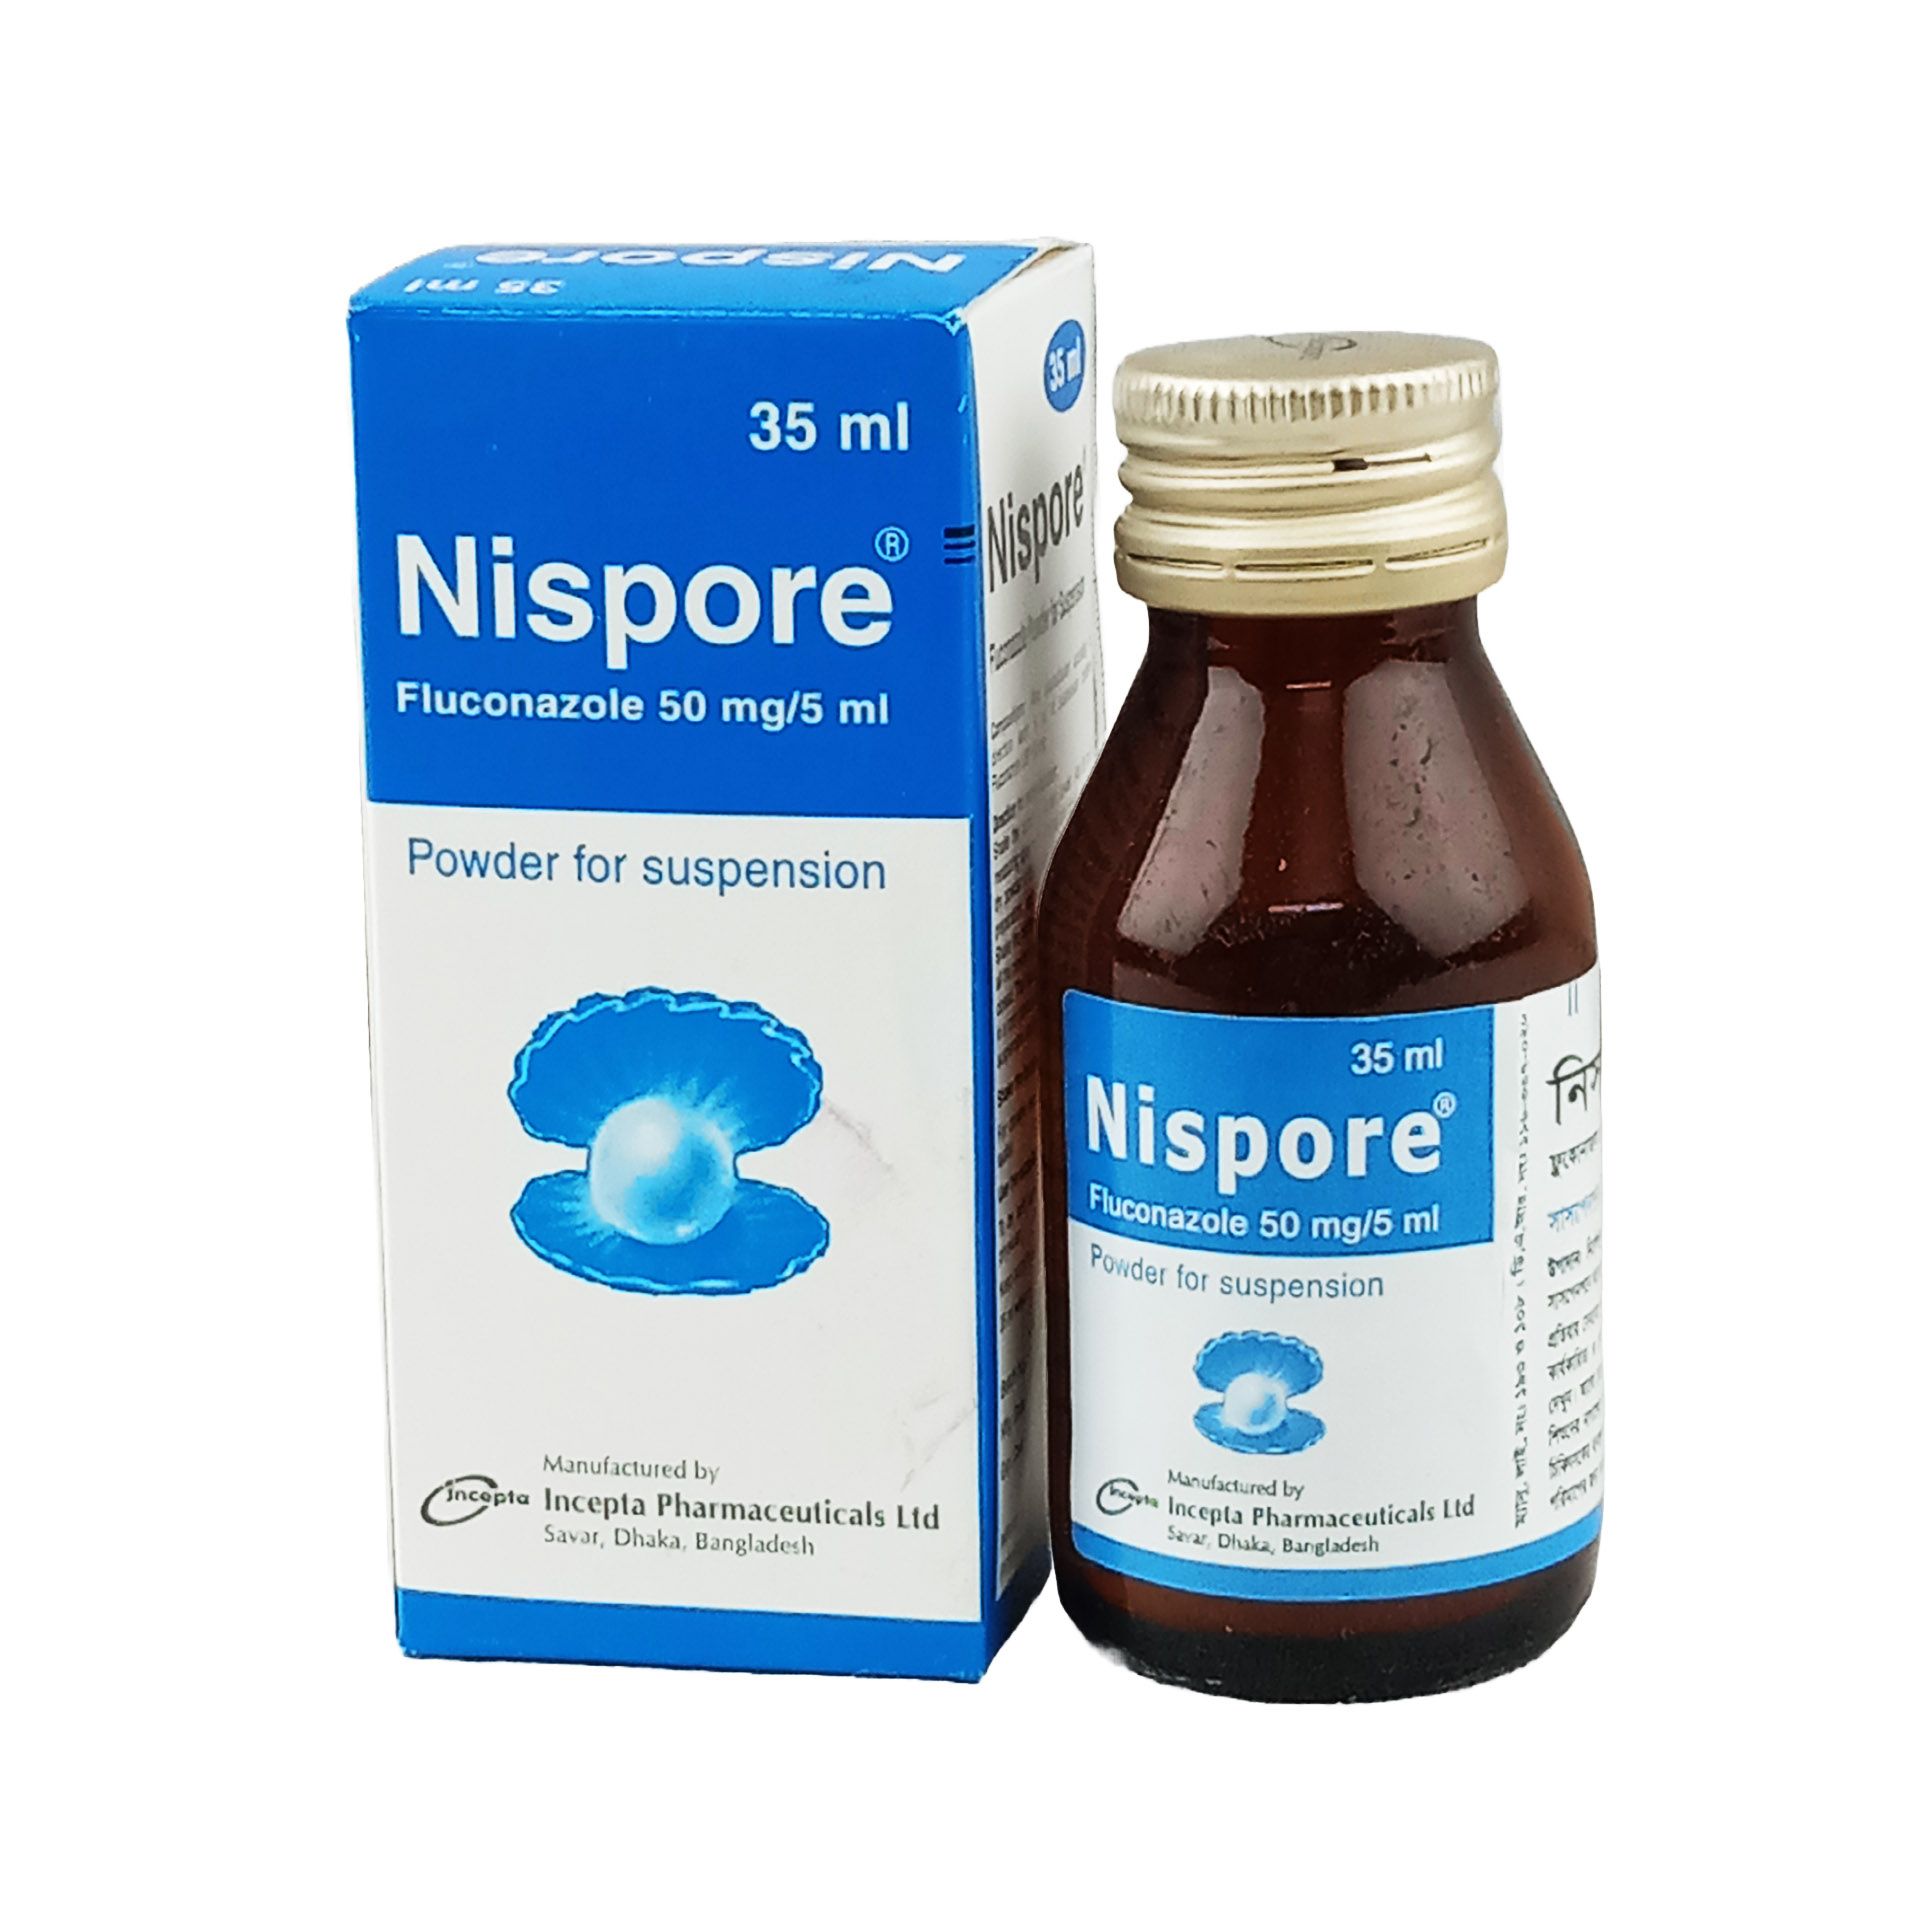 Nispore 50mg/5ml Powder for Suspension